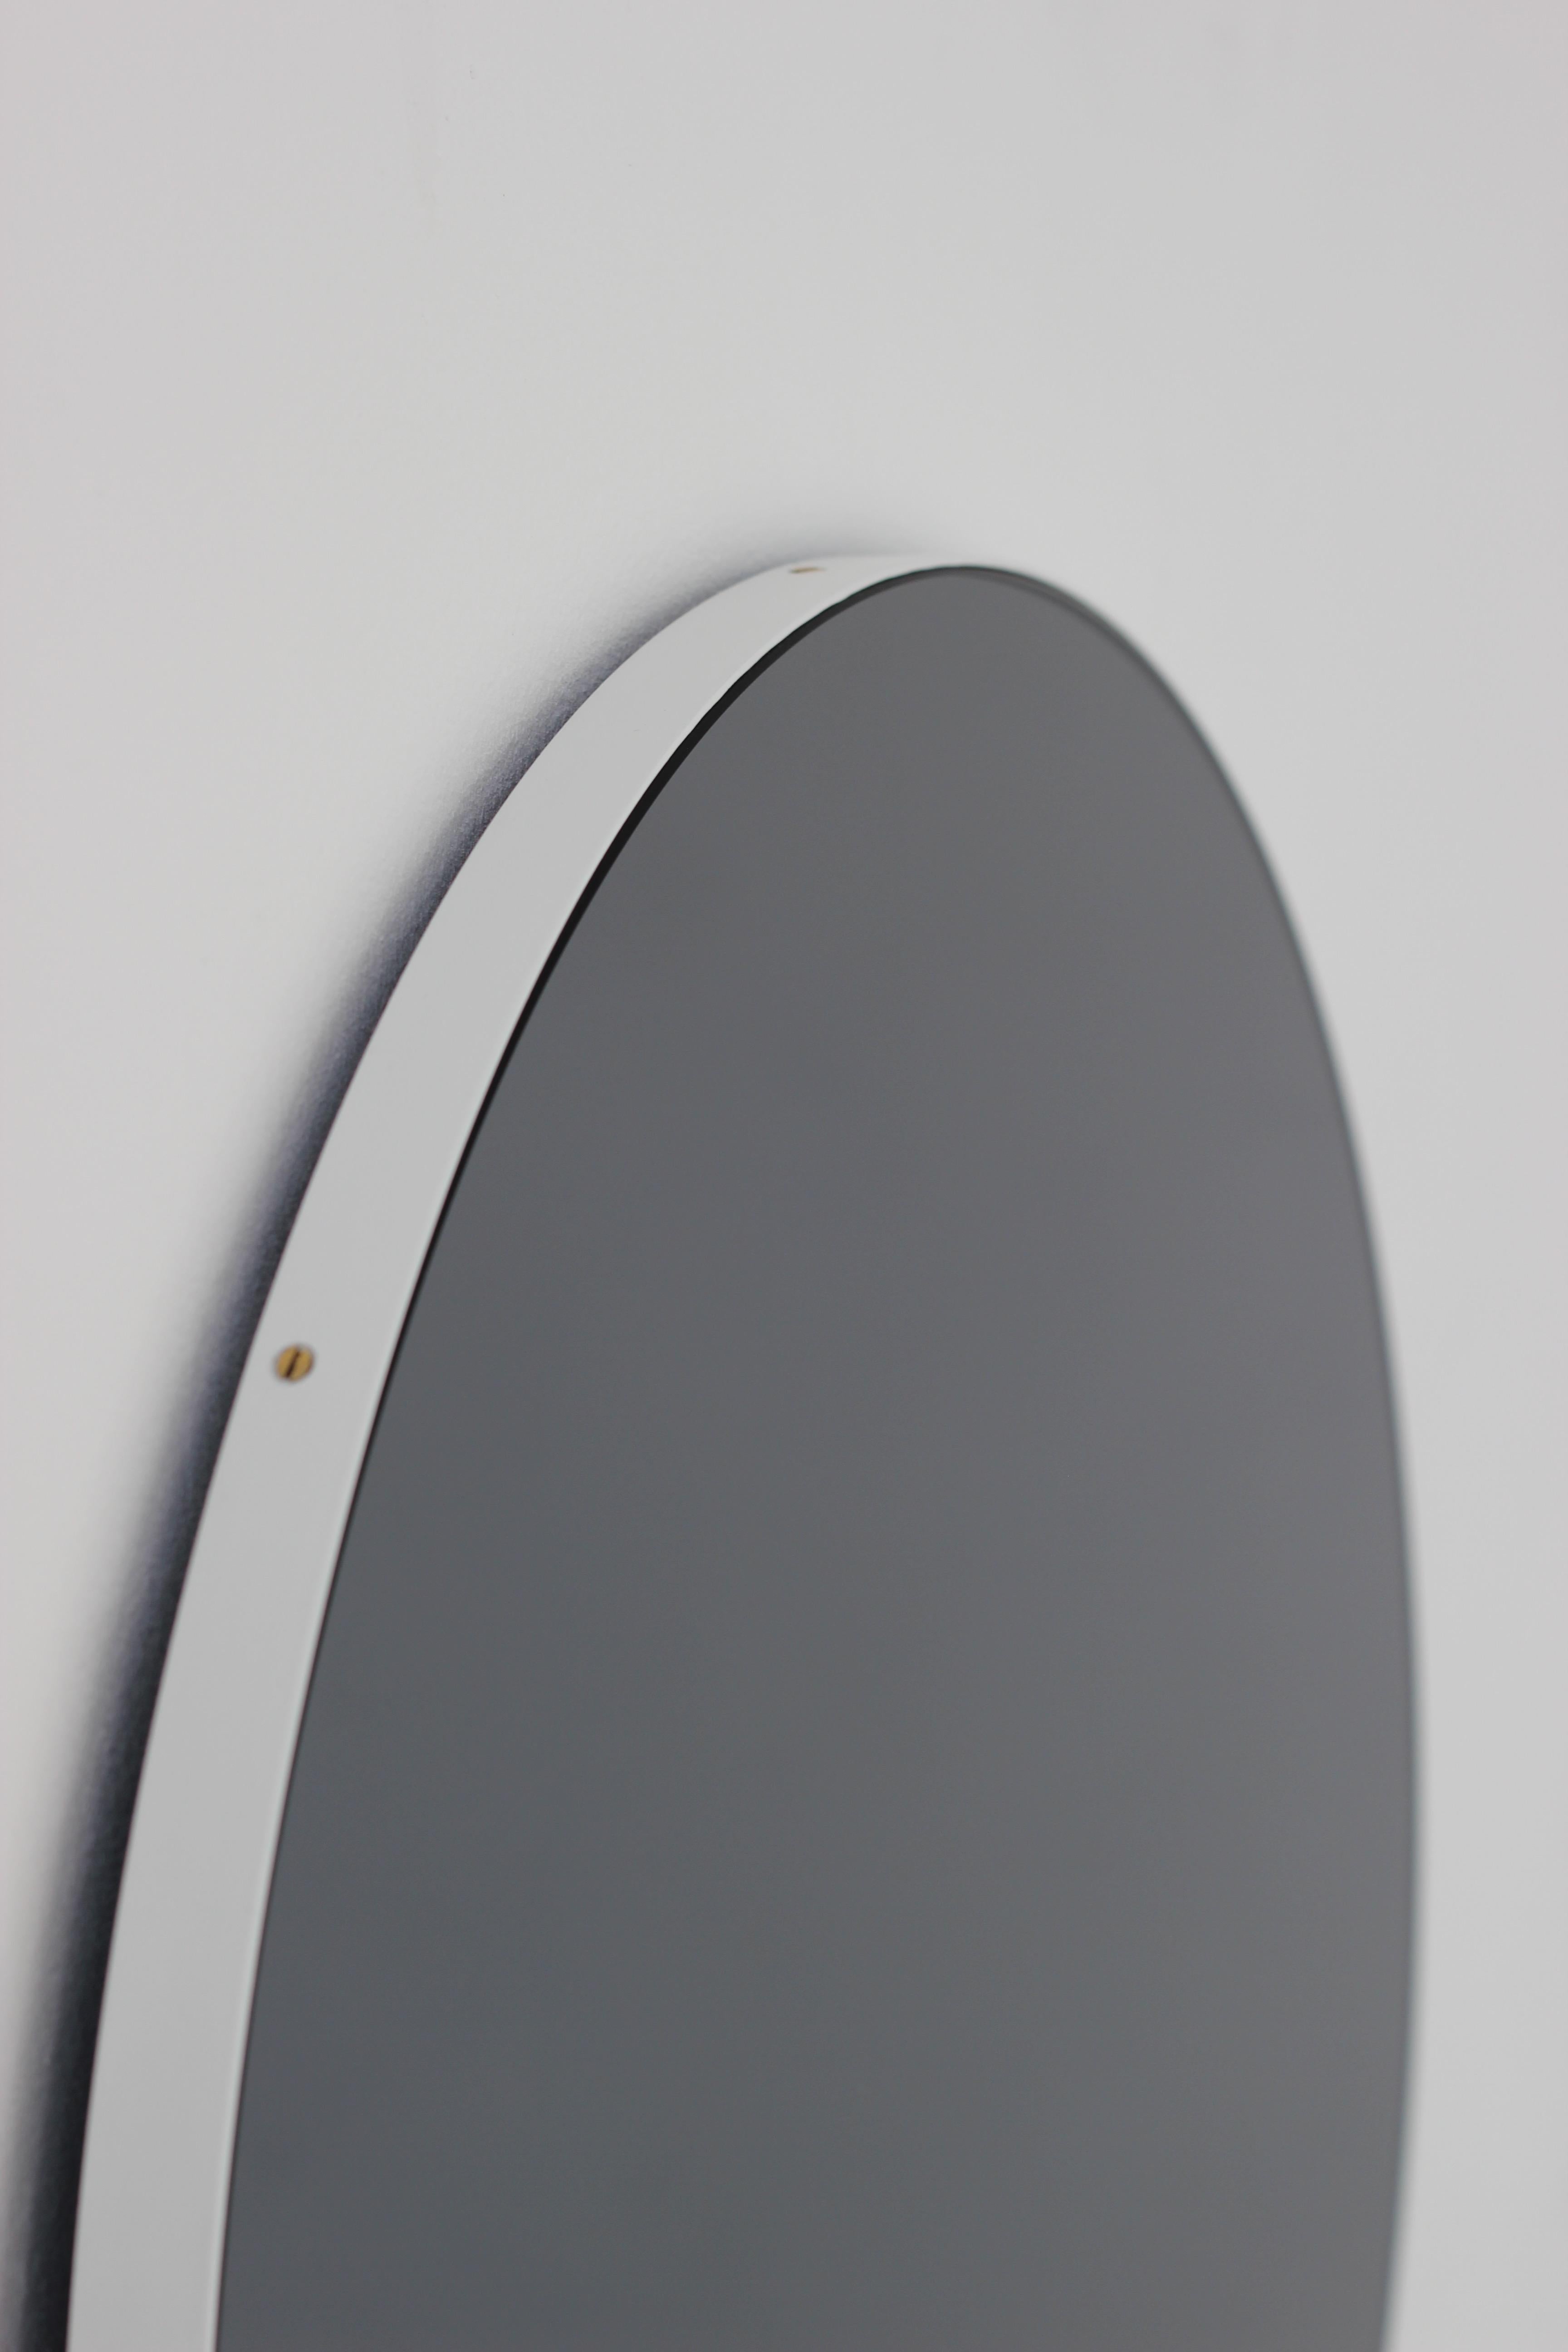 Contemporary Orbis Round Black Tinted Modern Art Deco Mirror with White Frame - Oversized